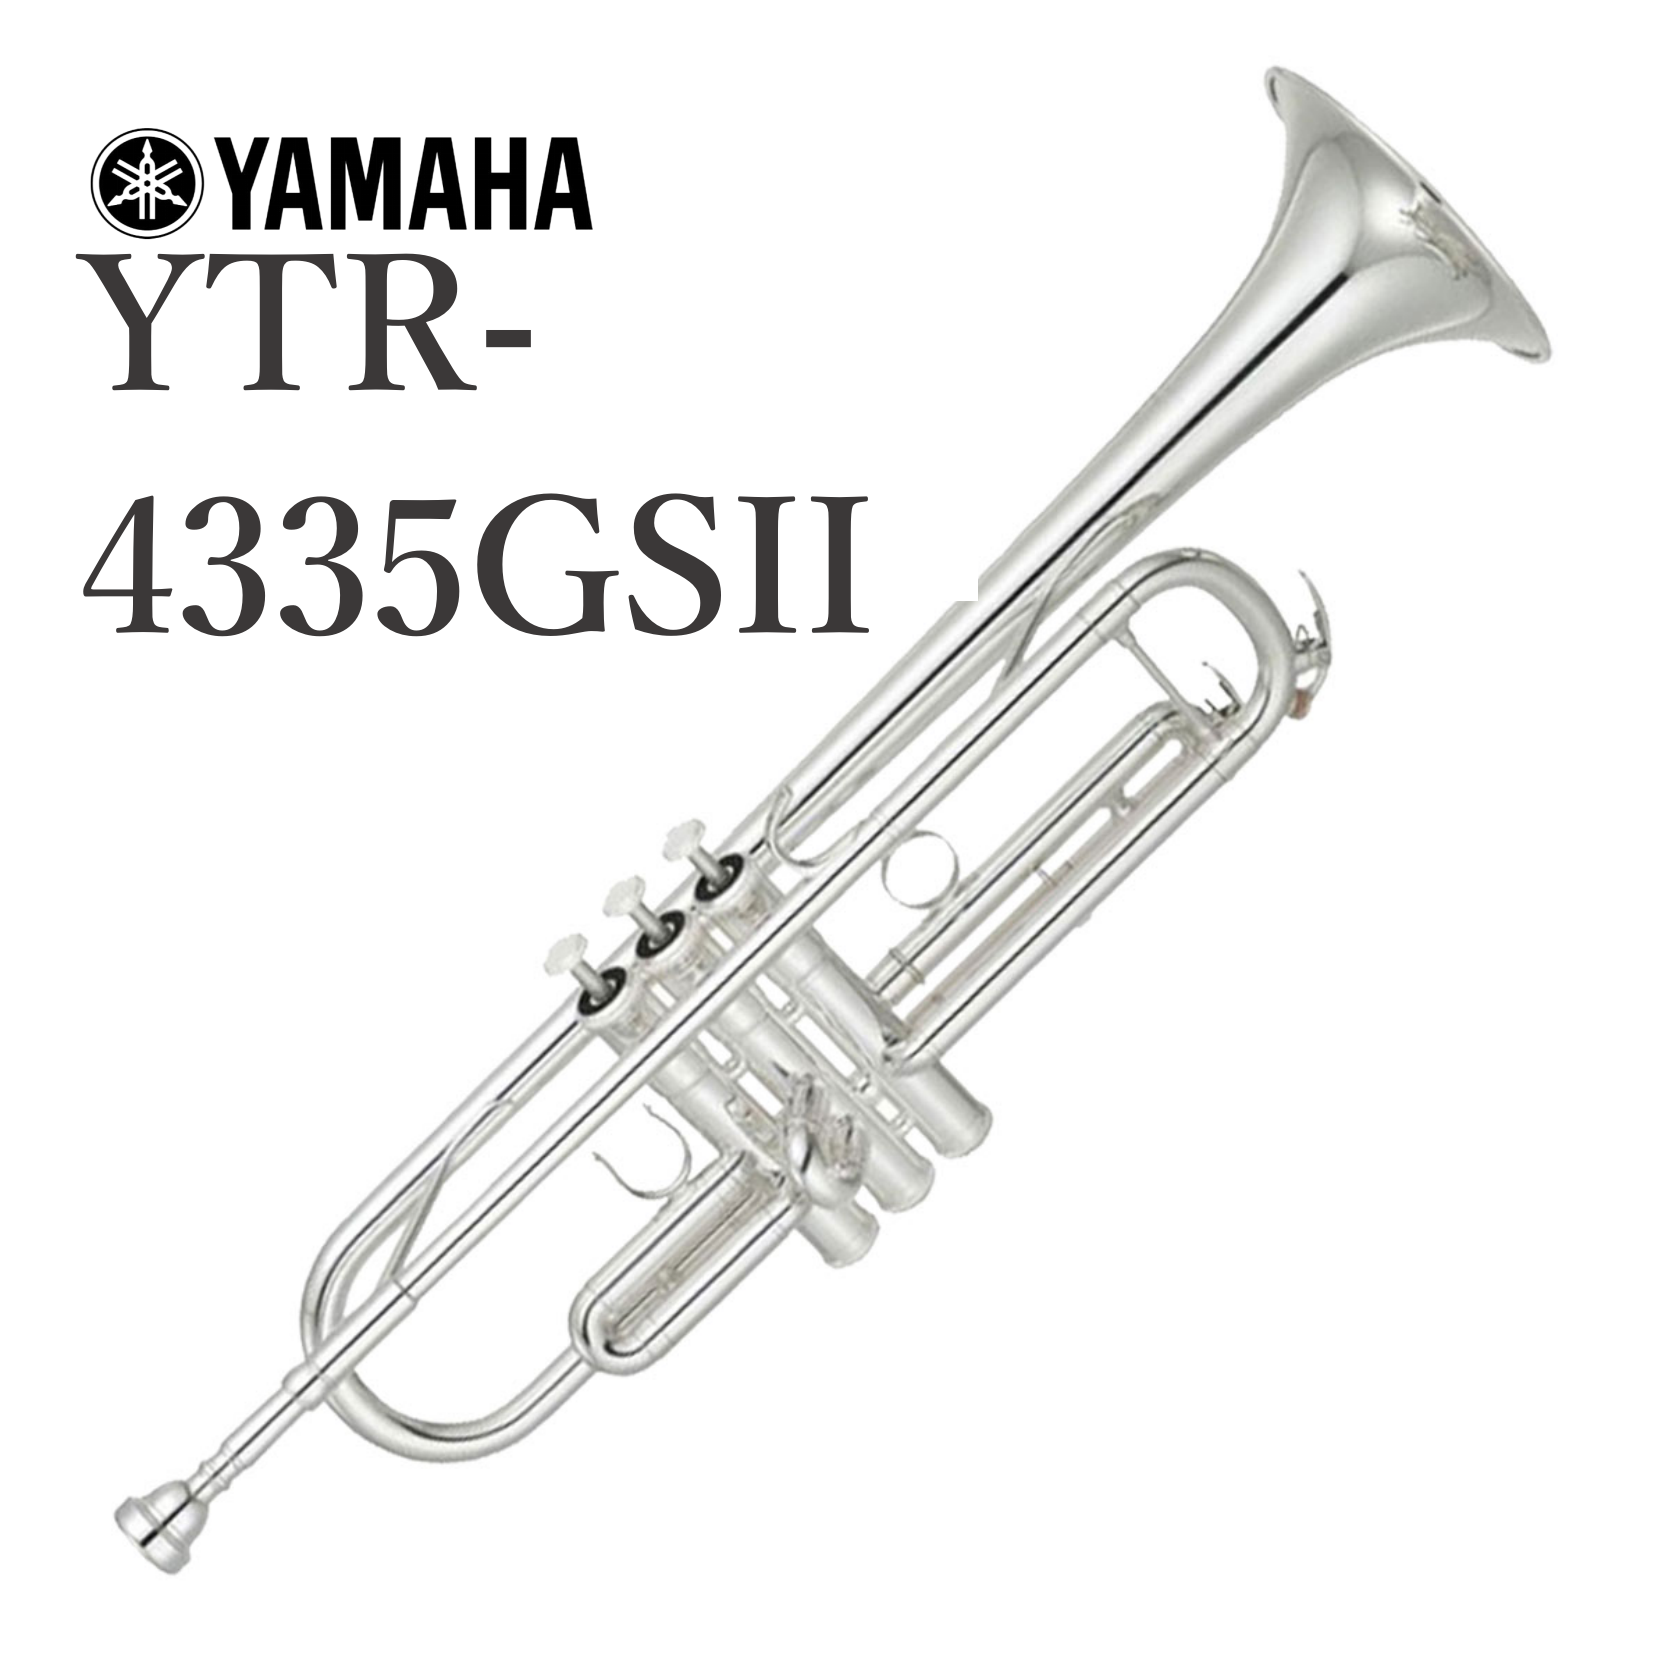 YAMAHAYTR-4335GSII